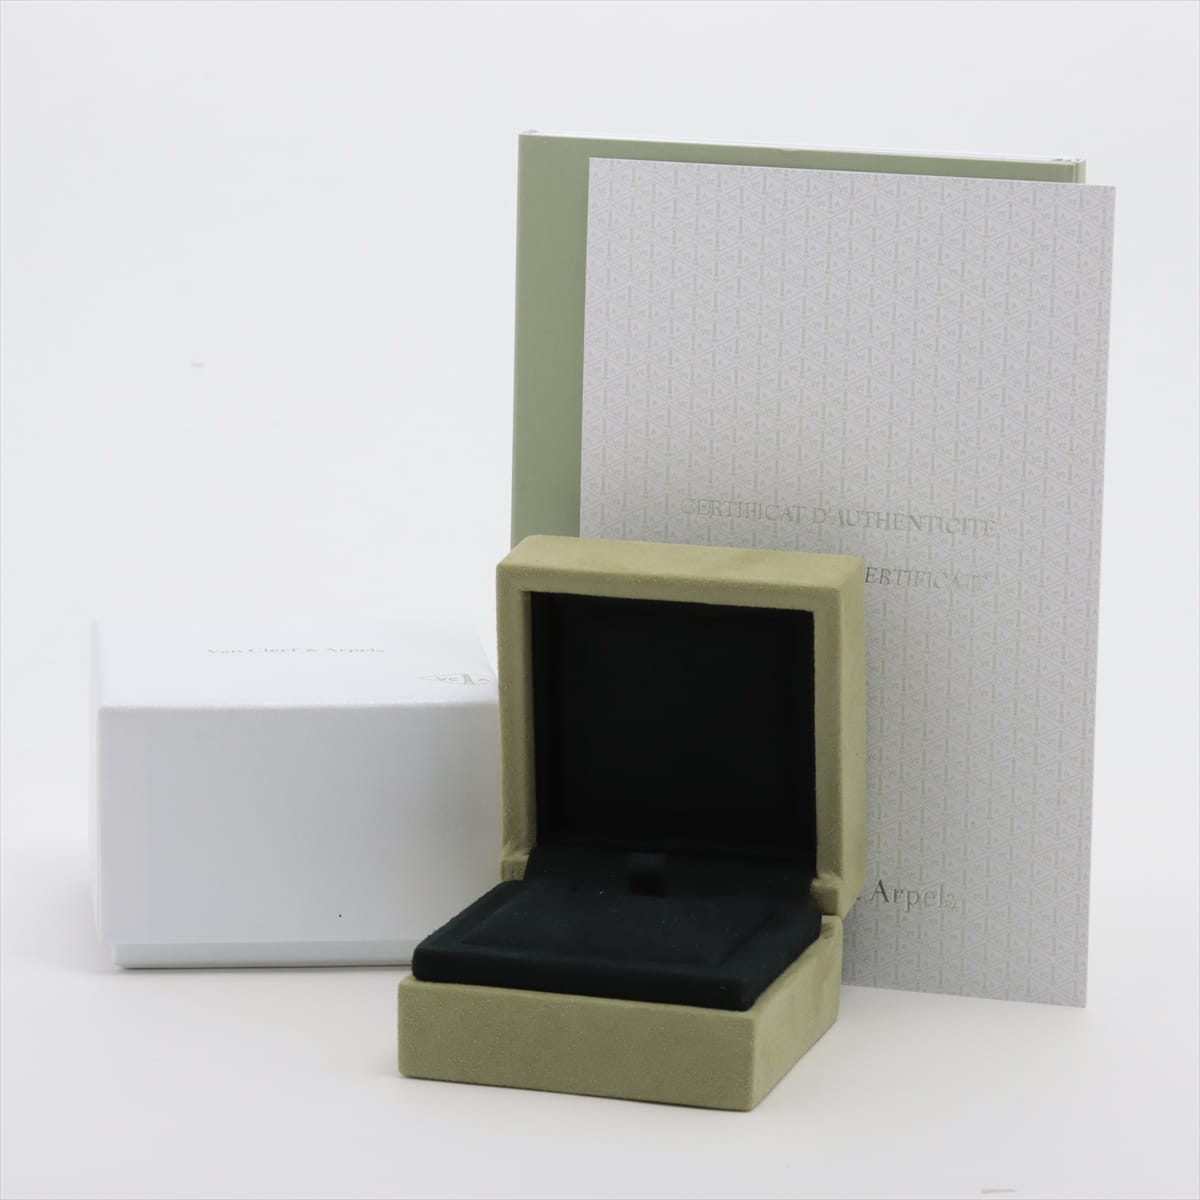 Van Cleef & Arpels Vintage Alhambra Seabler Diamond Necklace 750 (WG)